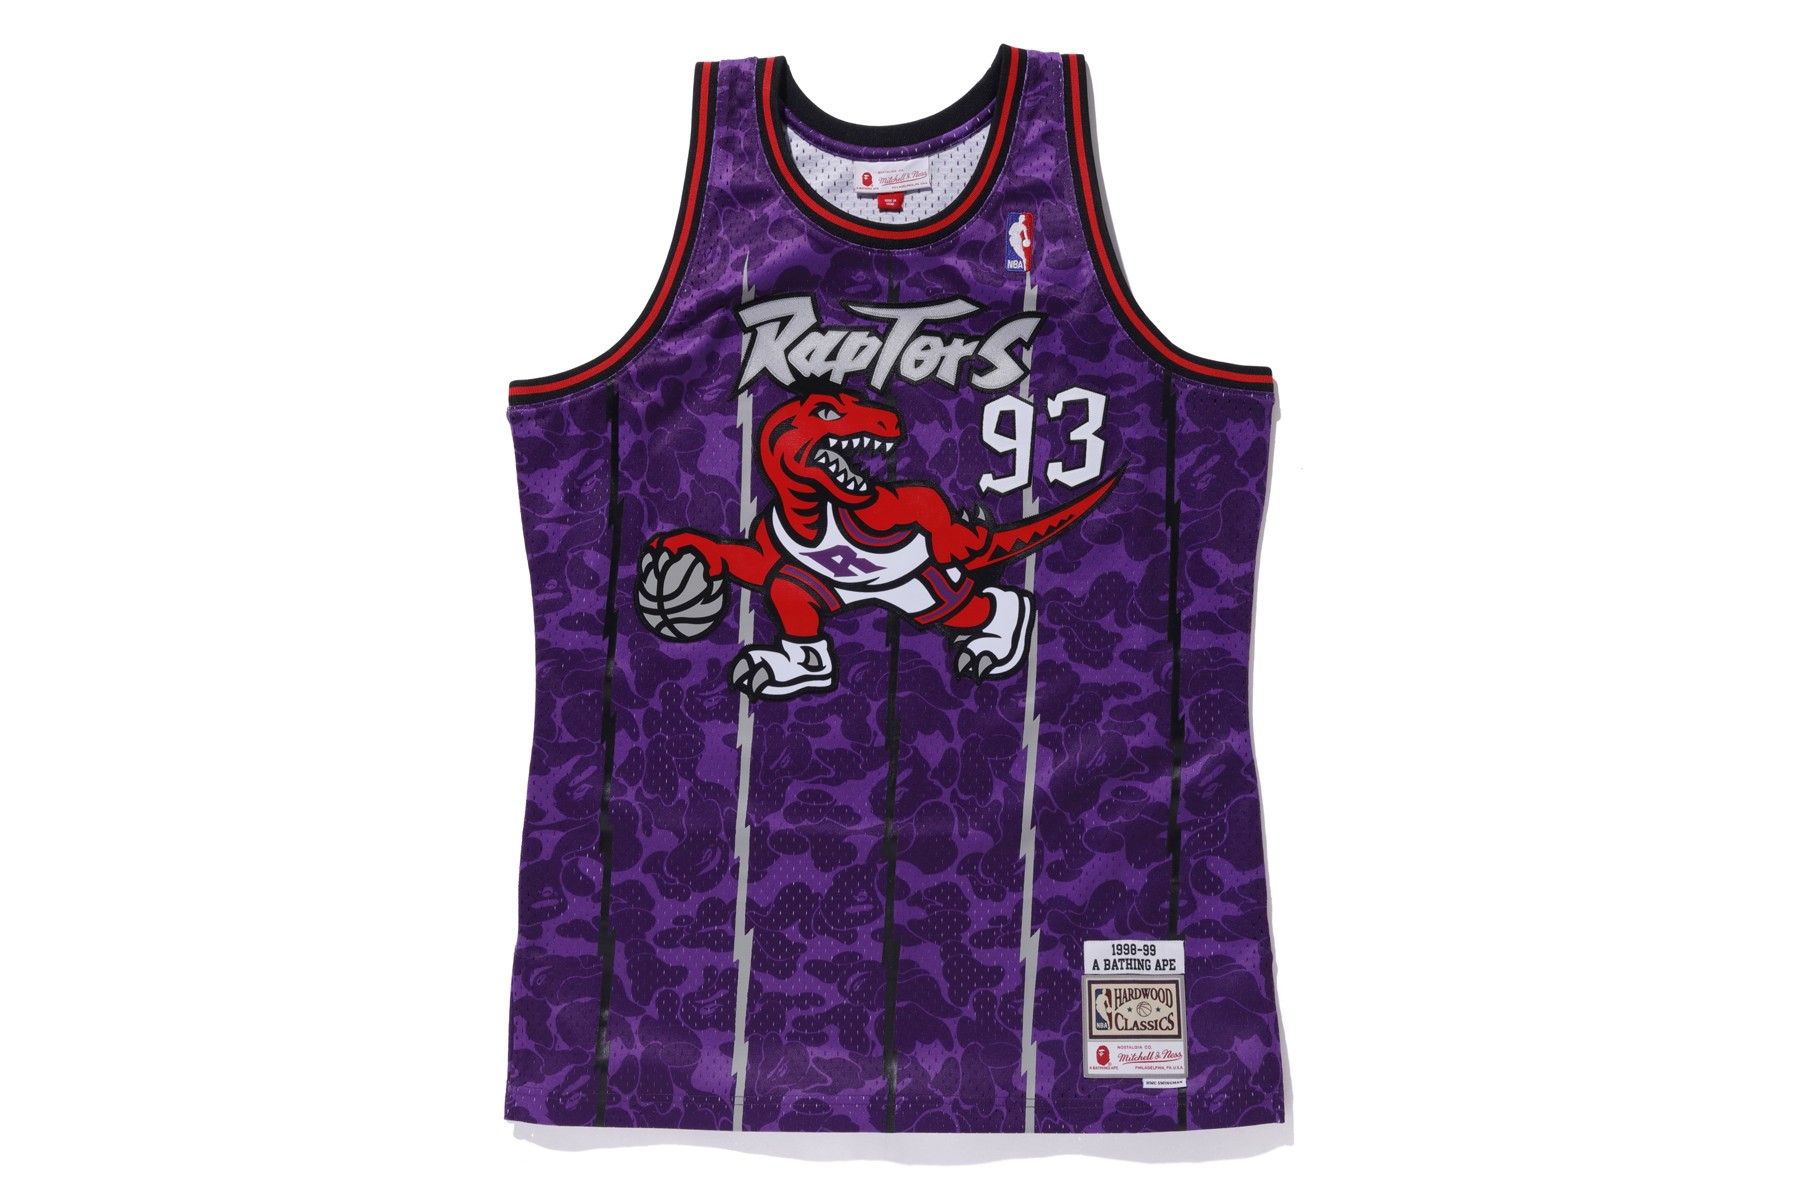 BAPE x Mitchell & Ness Raptors Camo Basketball Swingman Jersey Purple